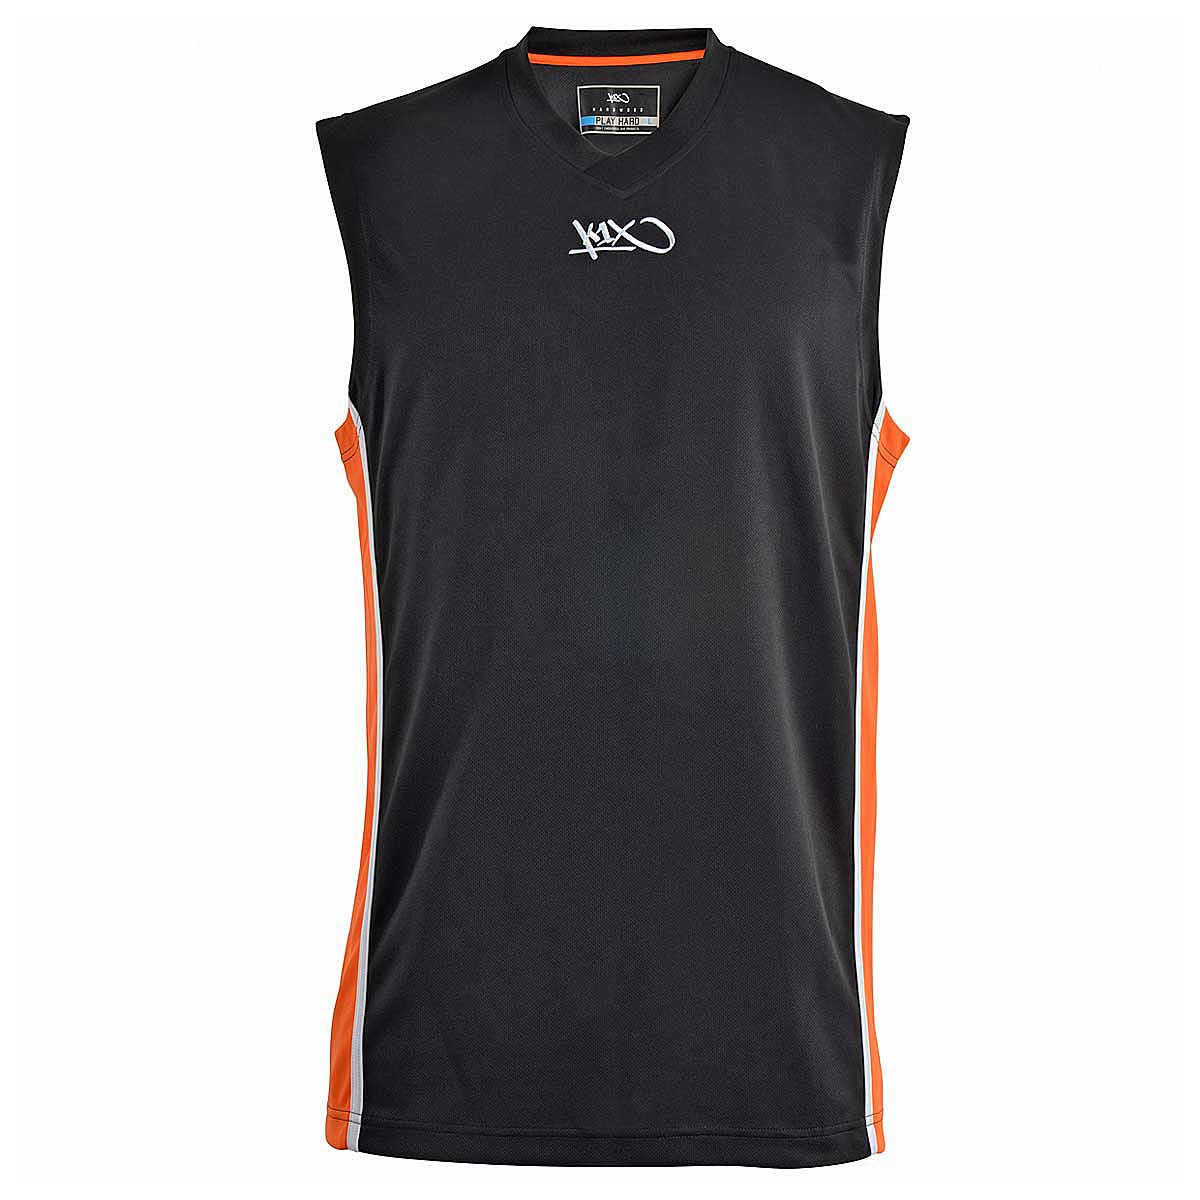 K1X K1X Hardwood League Uniform Jersey Mk2, Black/Orange/White